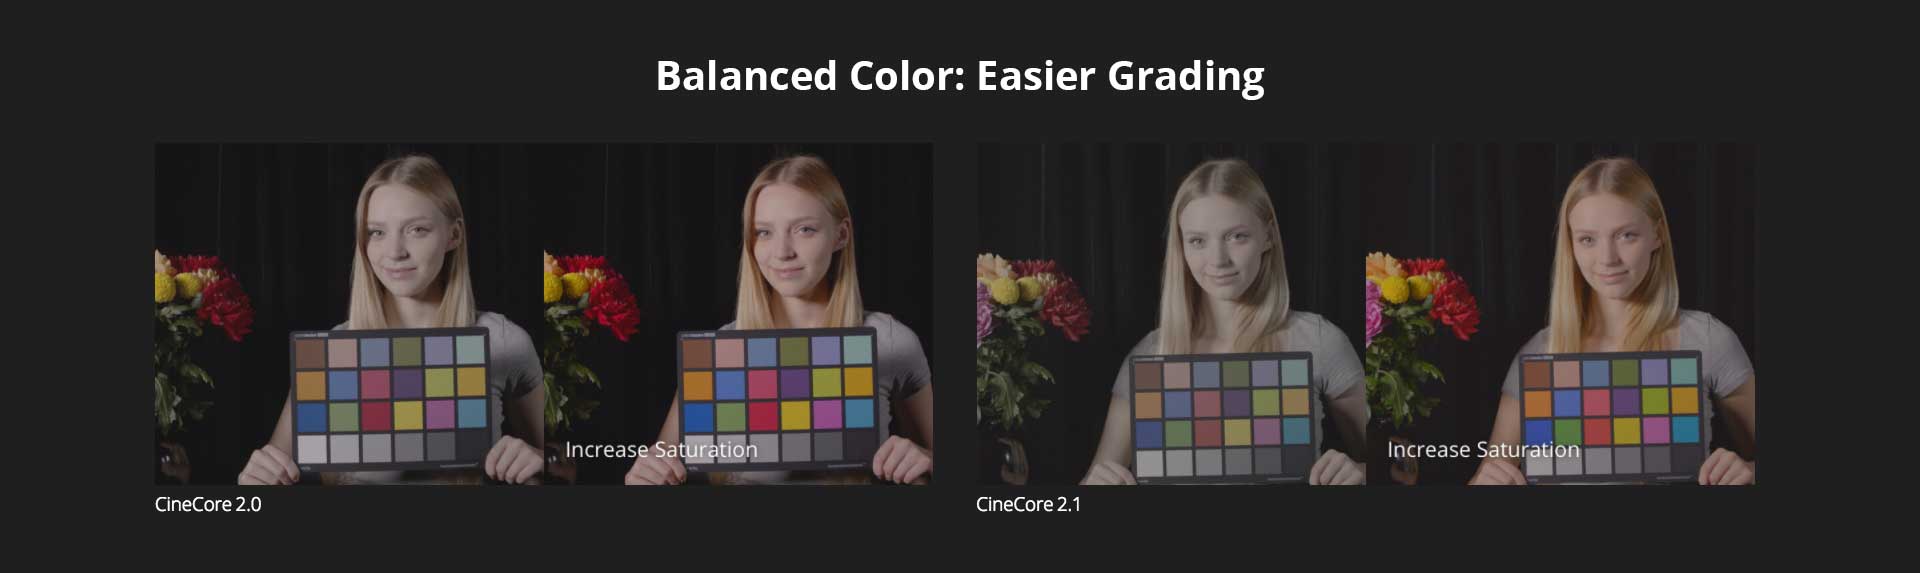 DJI Zenmuse X7 Balanced Color